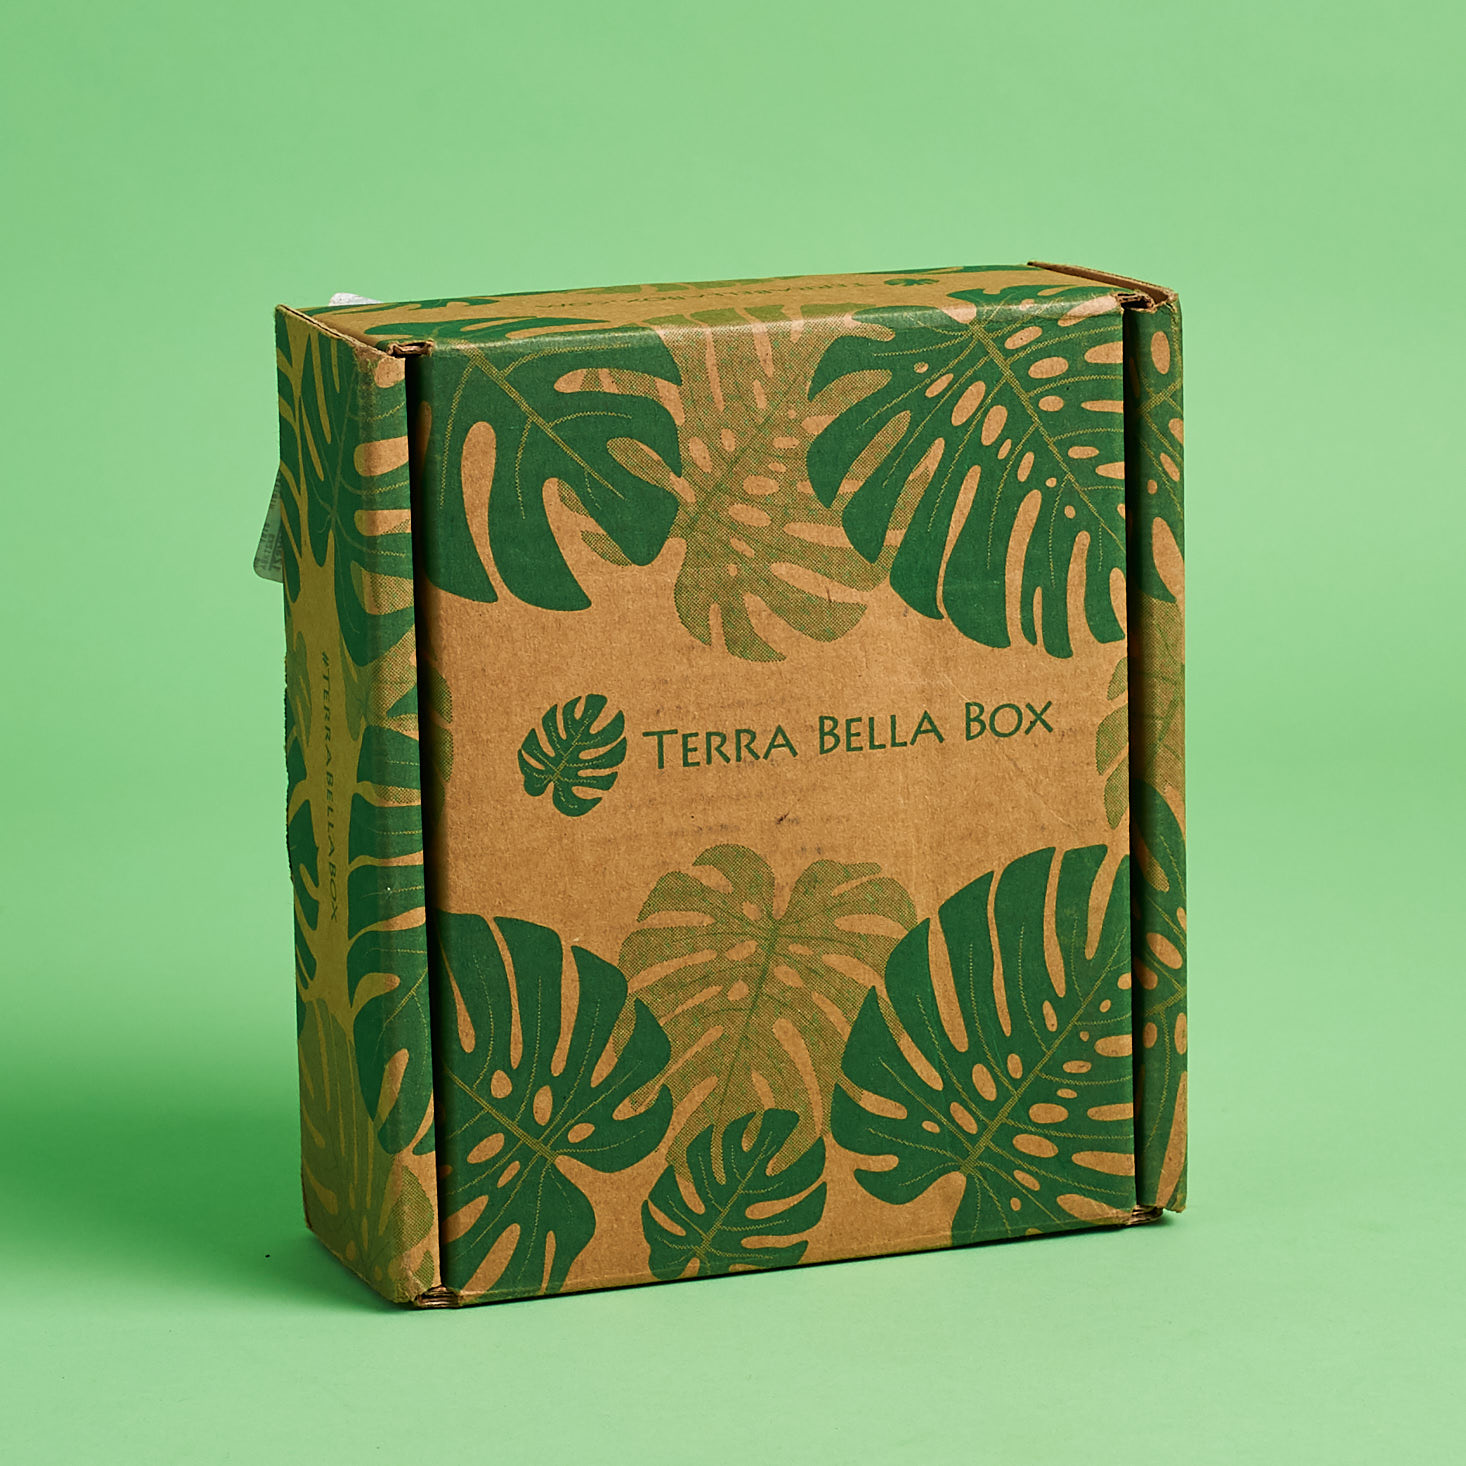 Terra Bella Box Subscription Review + Coupon – September 2017